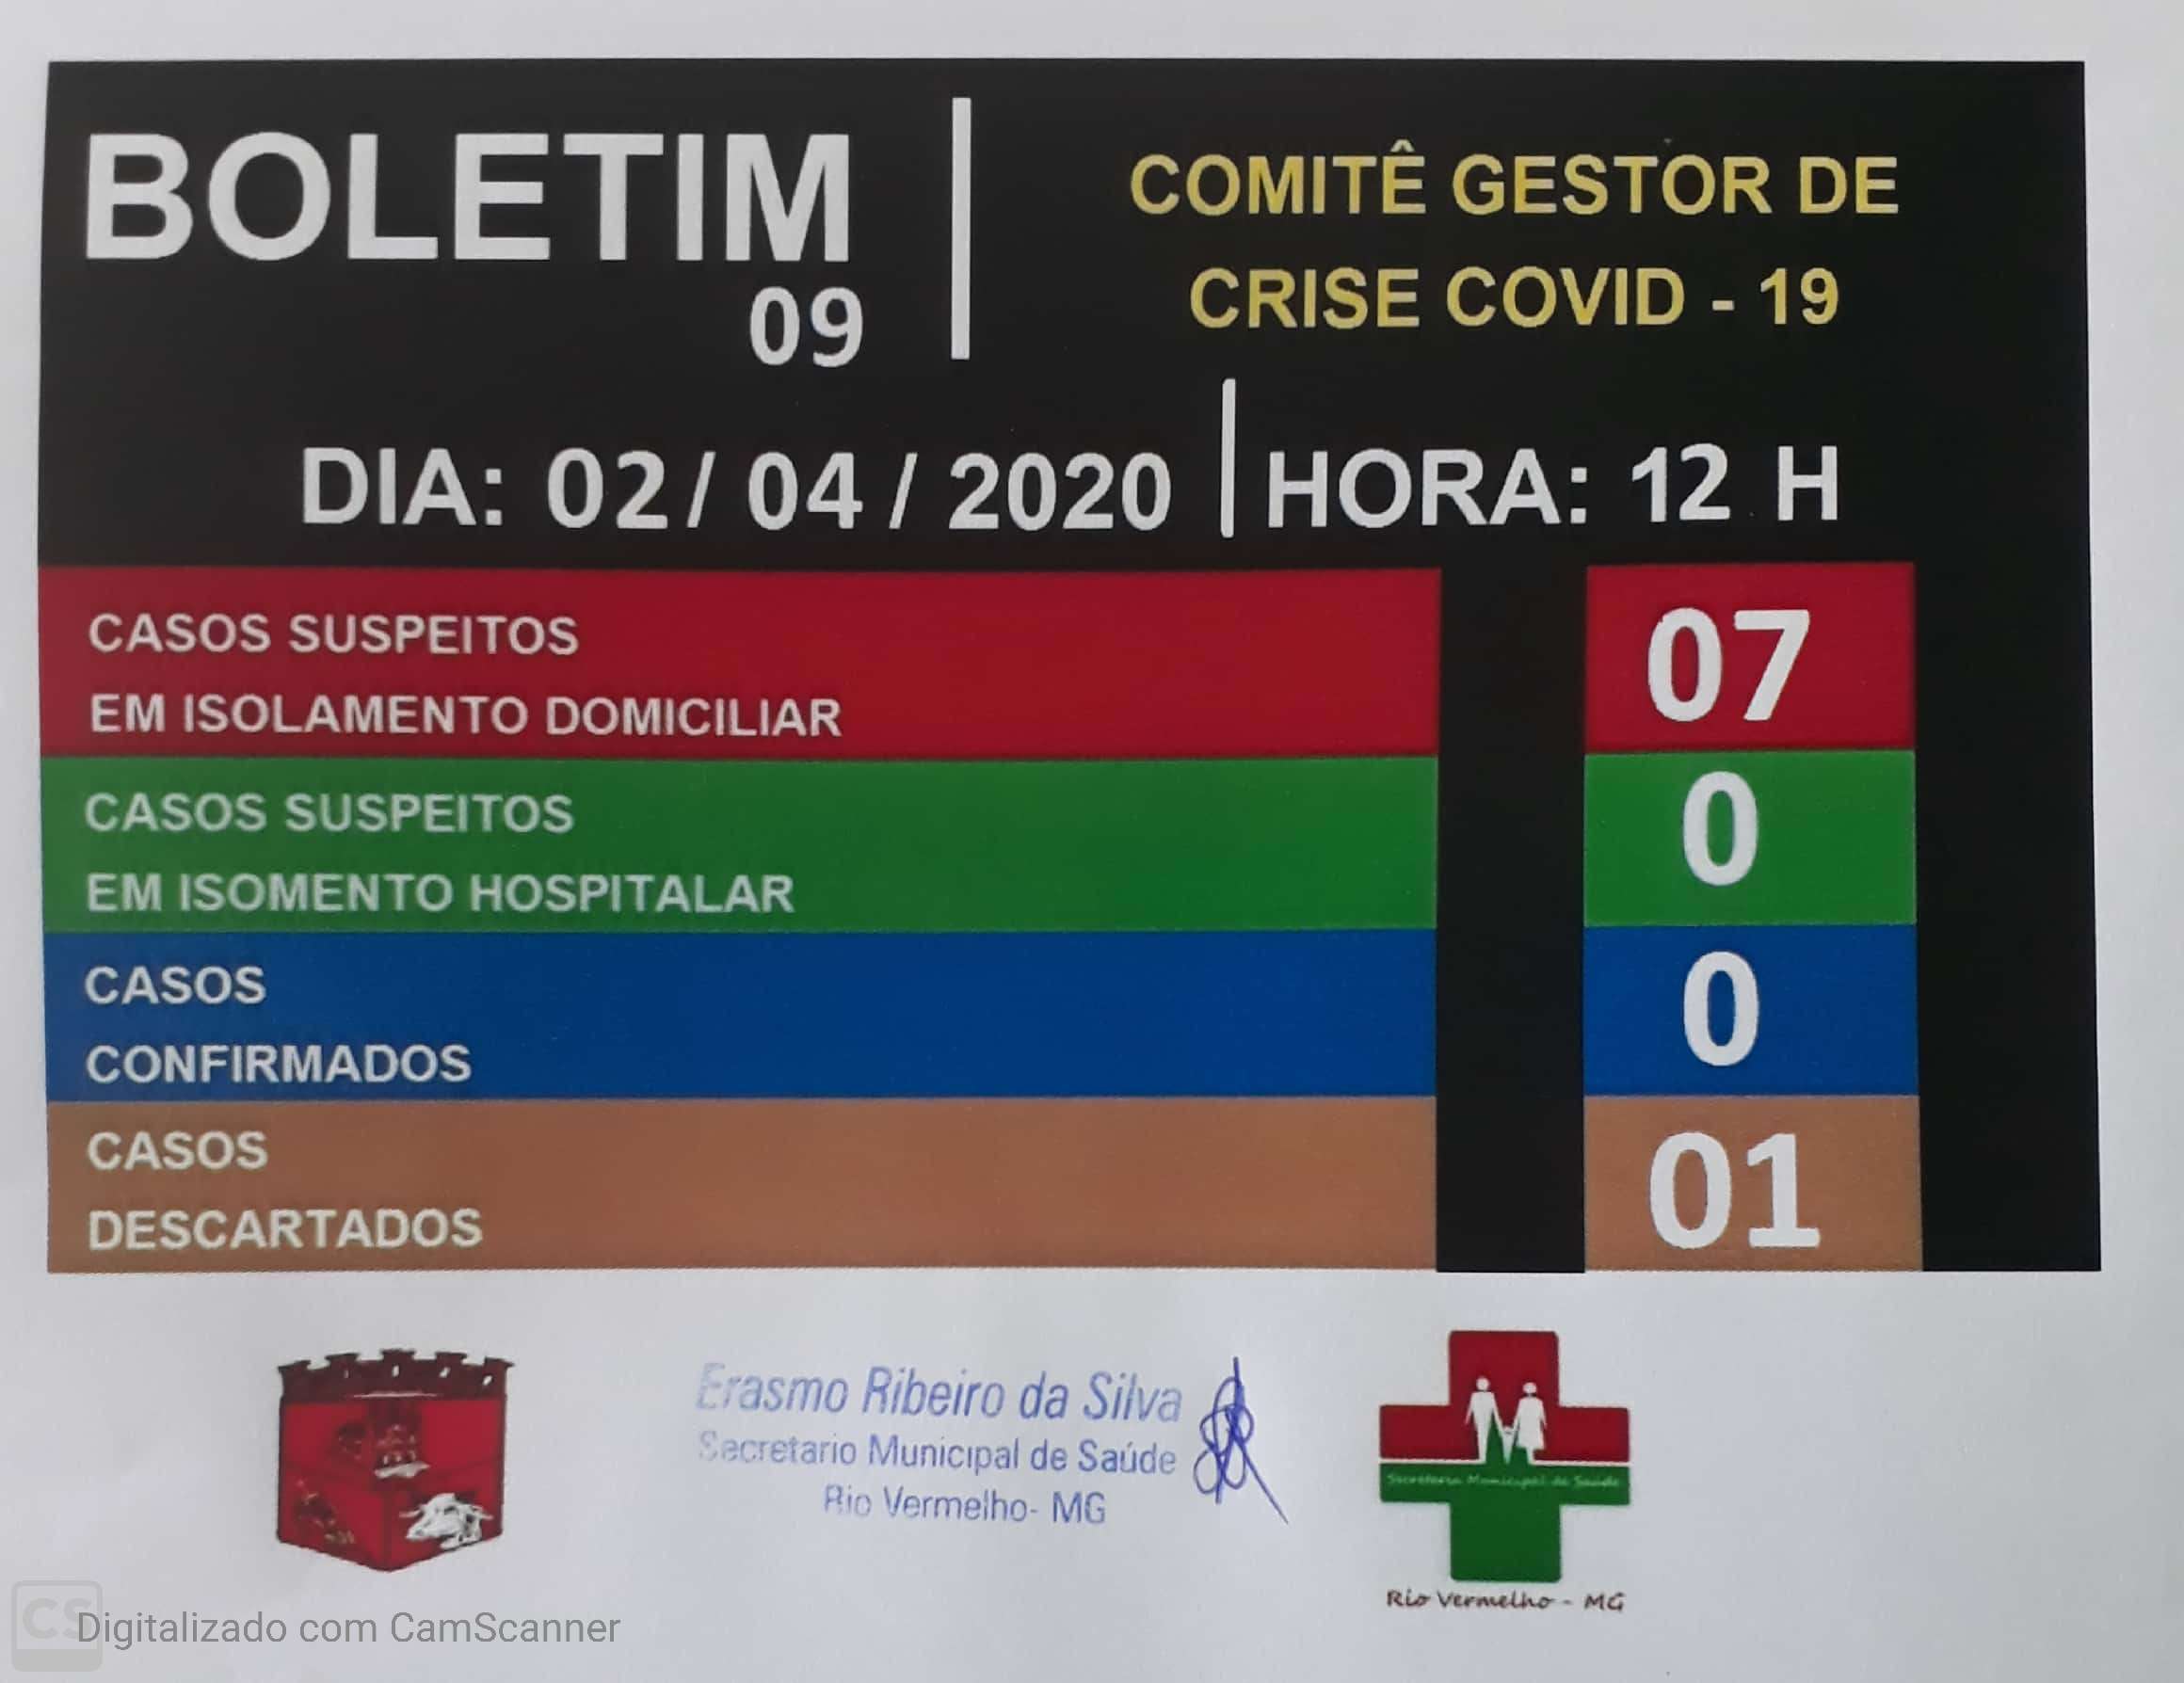 You are currently viewing BOLETIM 09 – Comitê Gestor de Crise COVID-19